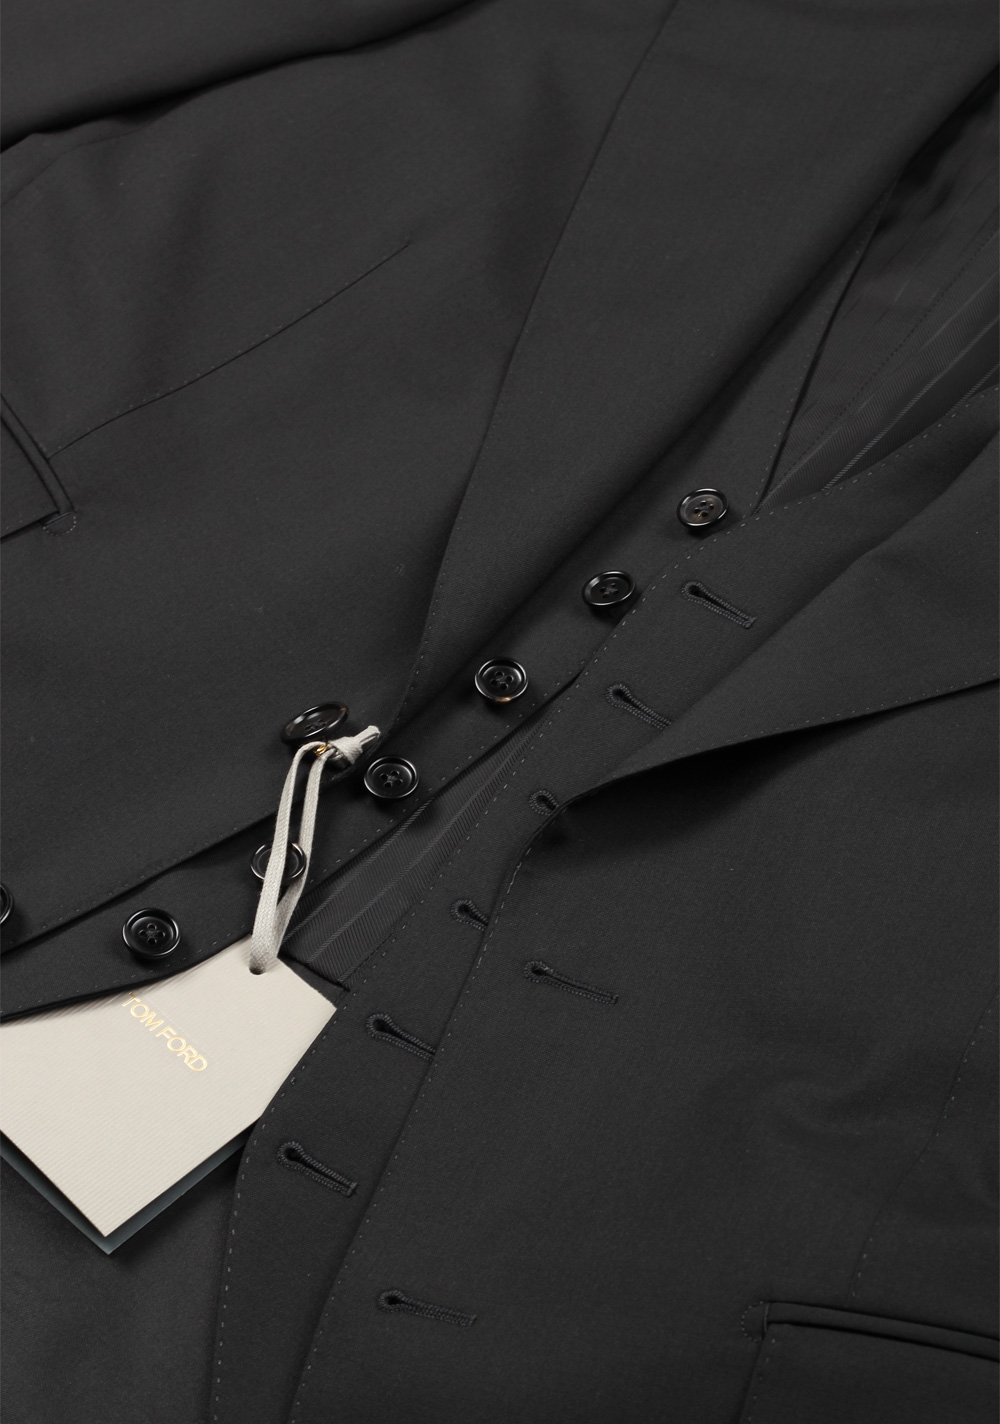 TOM FORD Windsor Signature Solid Black 3 Piece Suit | Costume Limité